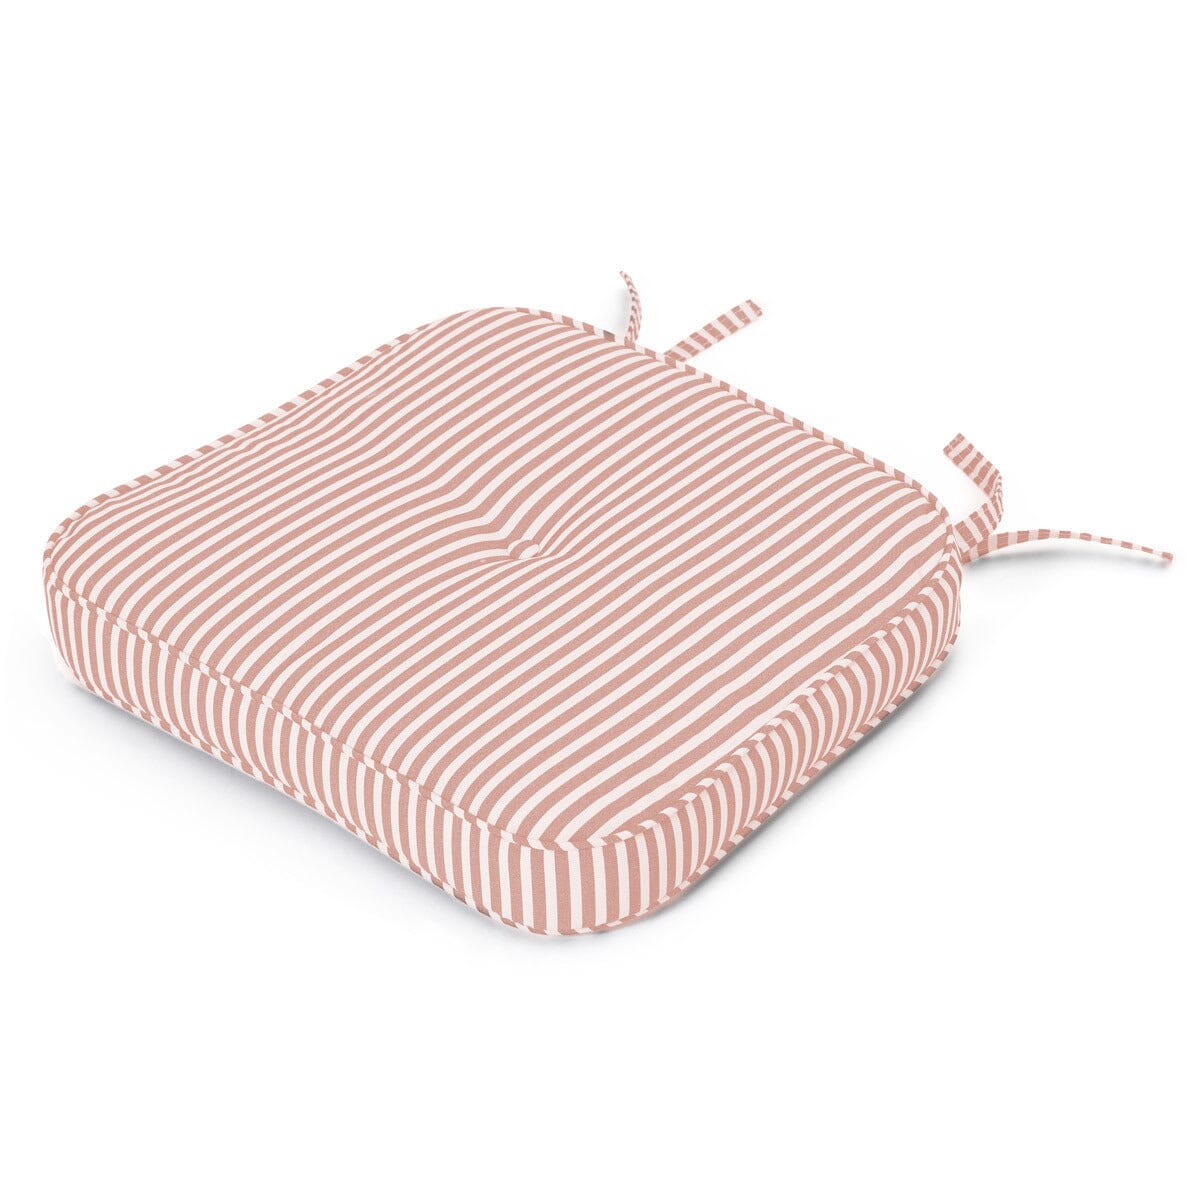 Pink Stripe Chair Cushion in studio